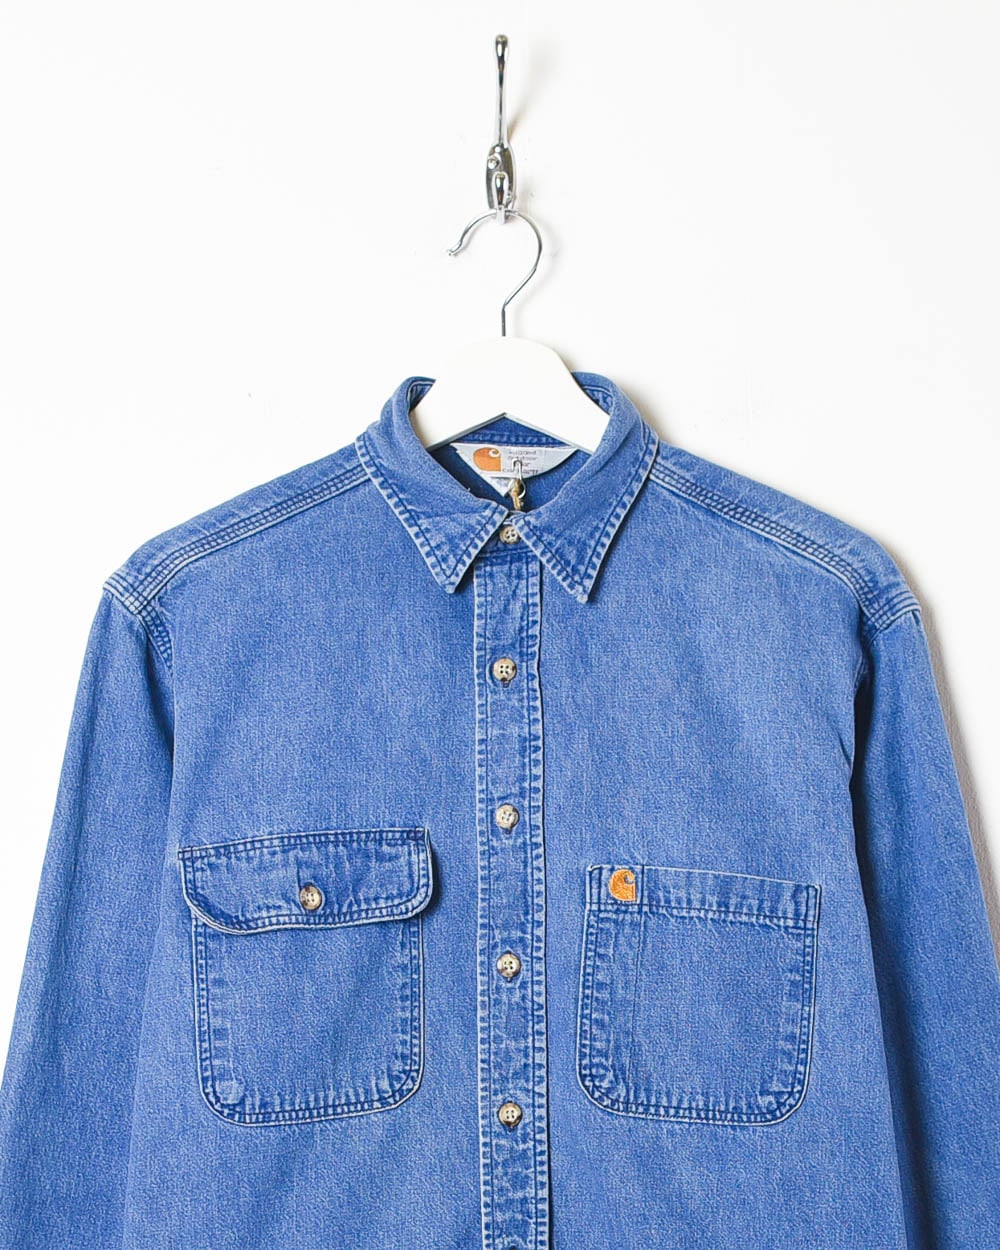 Blue Carhartt Denim Shirt - Medium